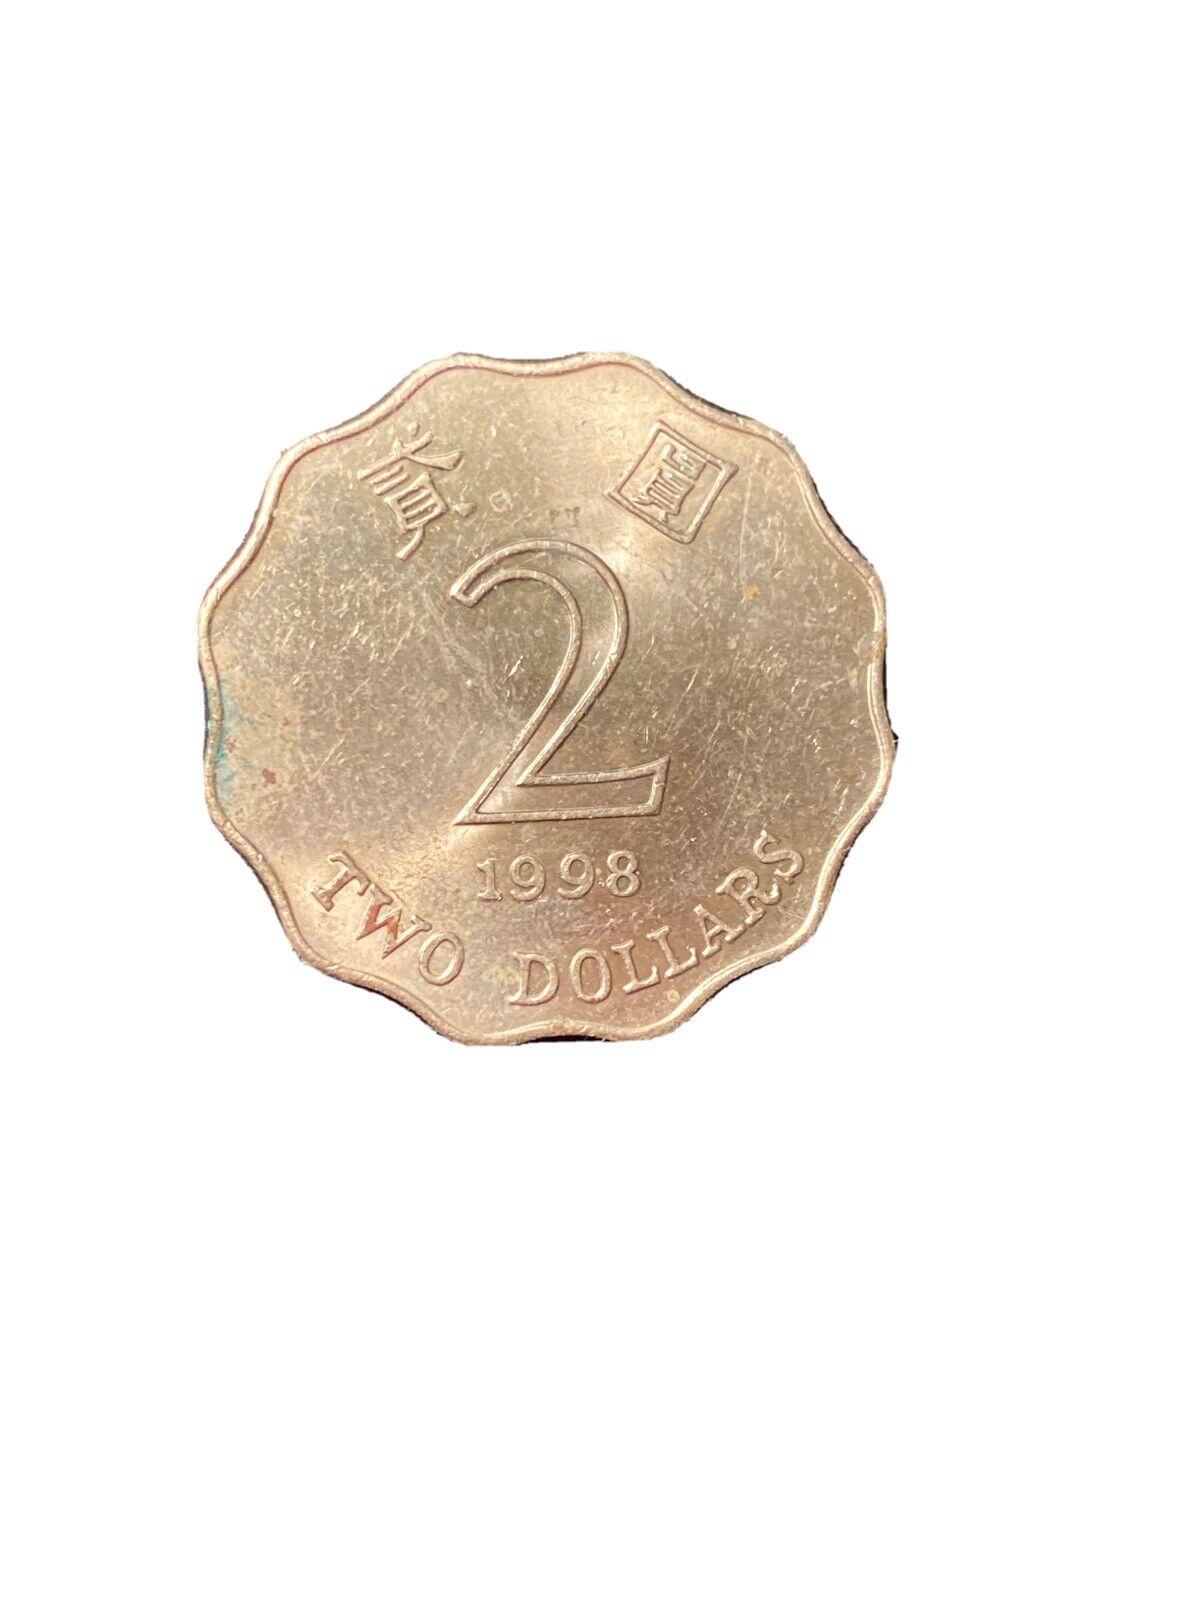 1982 Hong Kong 2 Dollar Coin